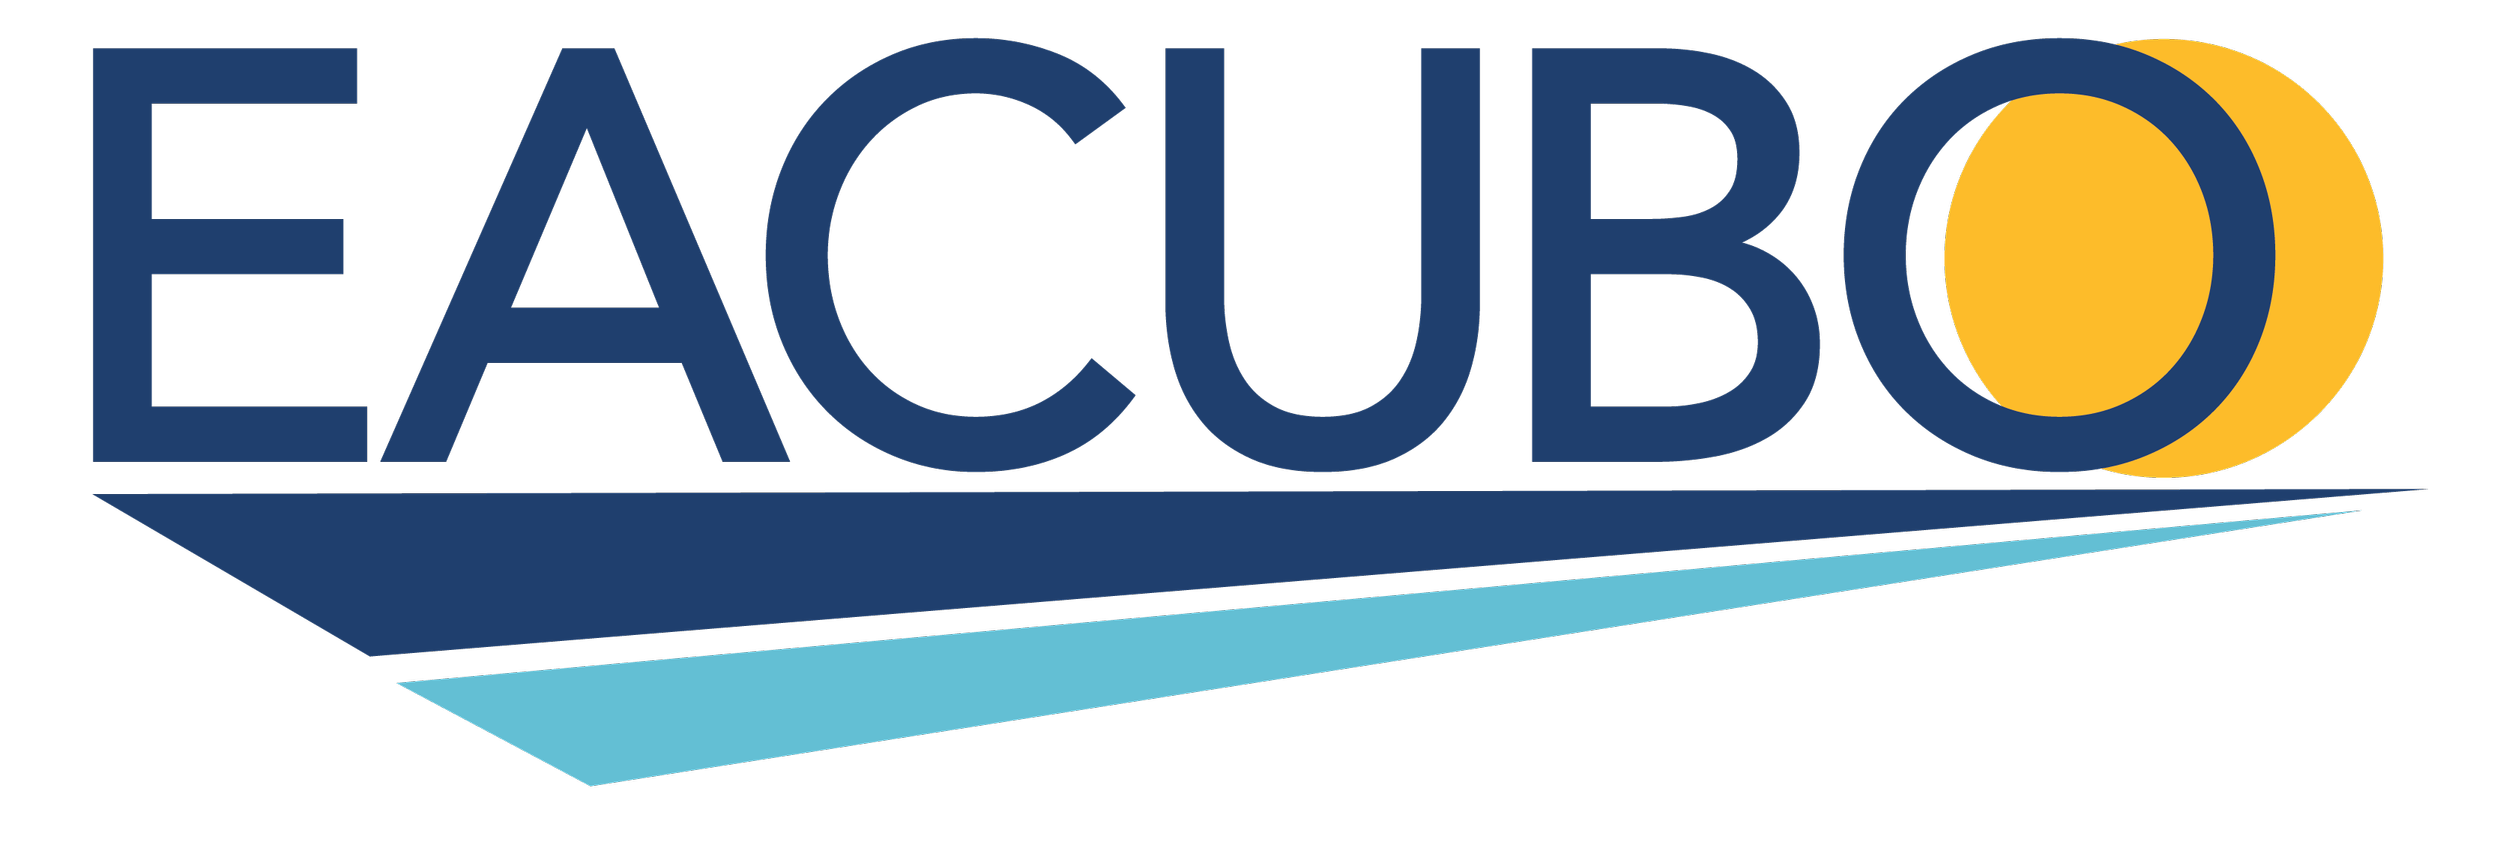 EACUBO logo.png